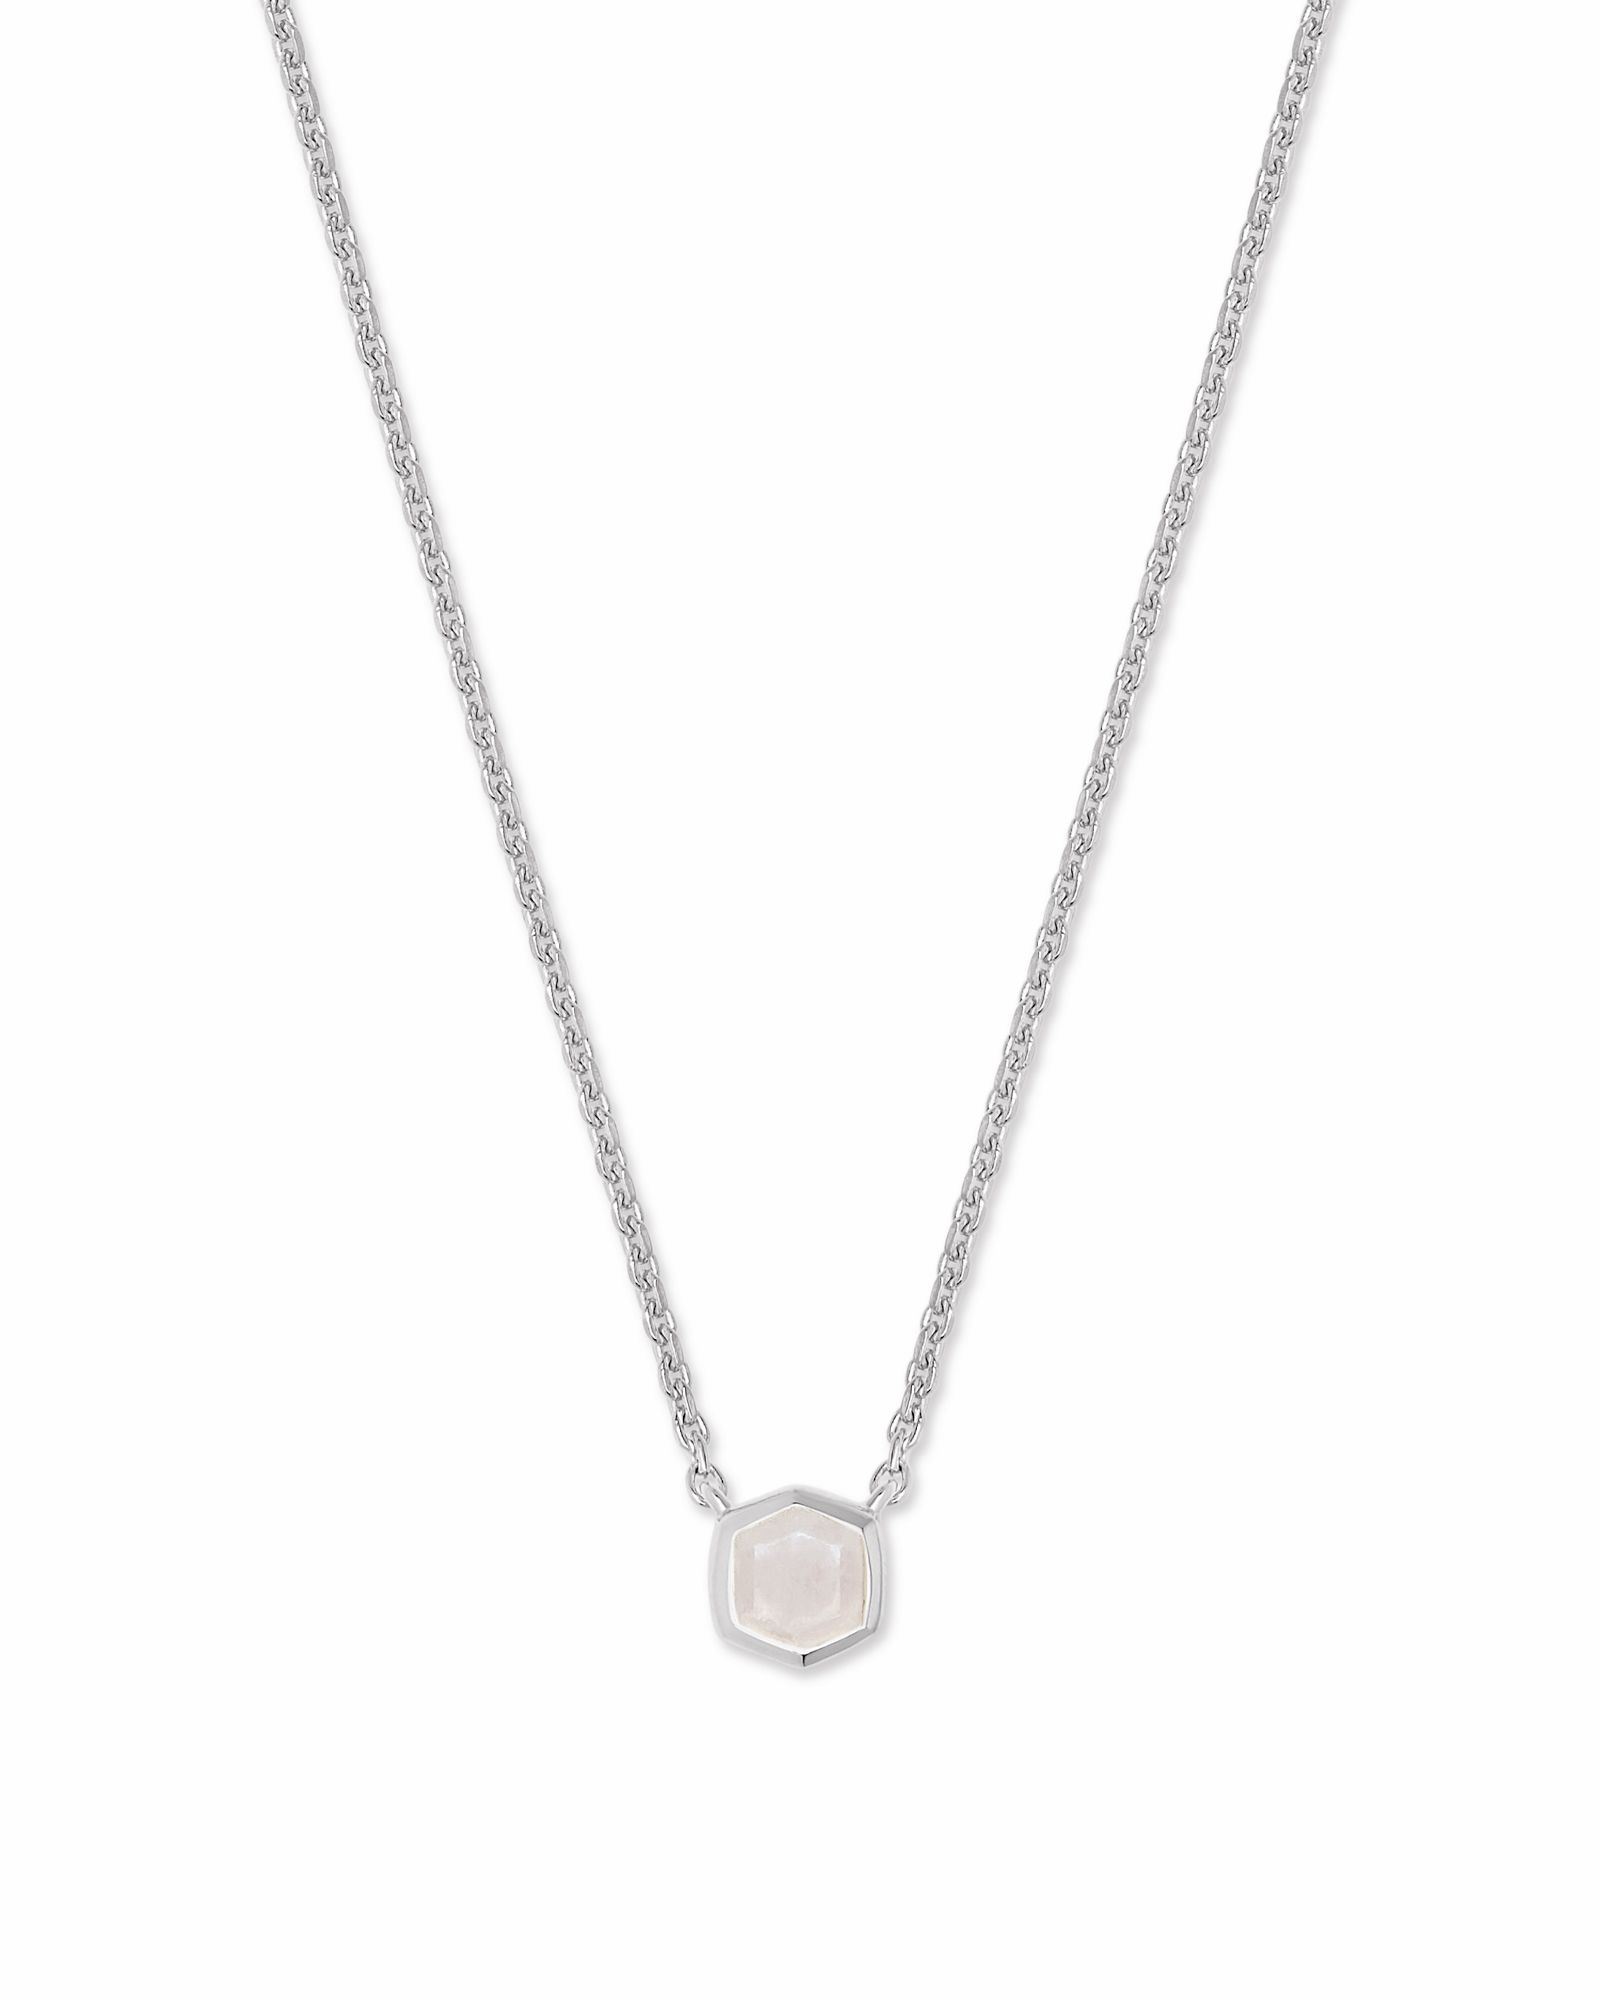 Davie Sterling Silver Pendant Necklace in Rainbow Moonstone | Kendra Scott | Kendra Scott